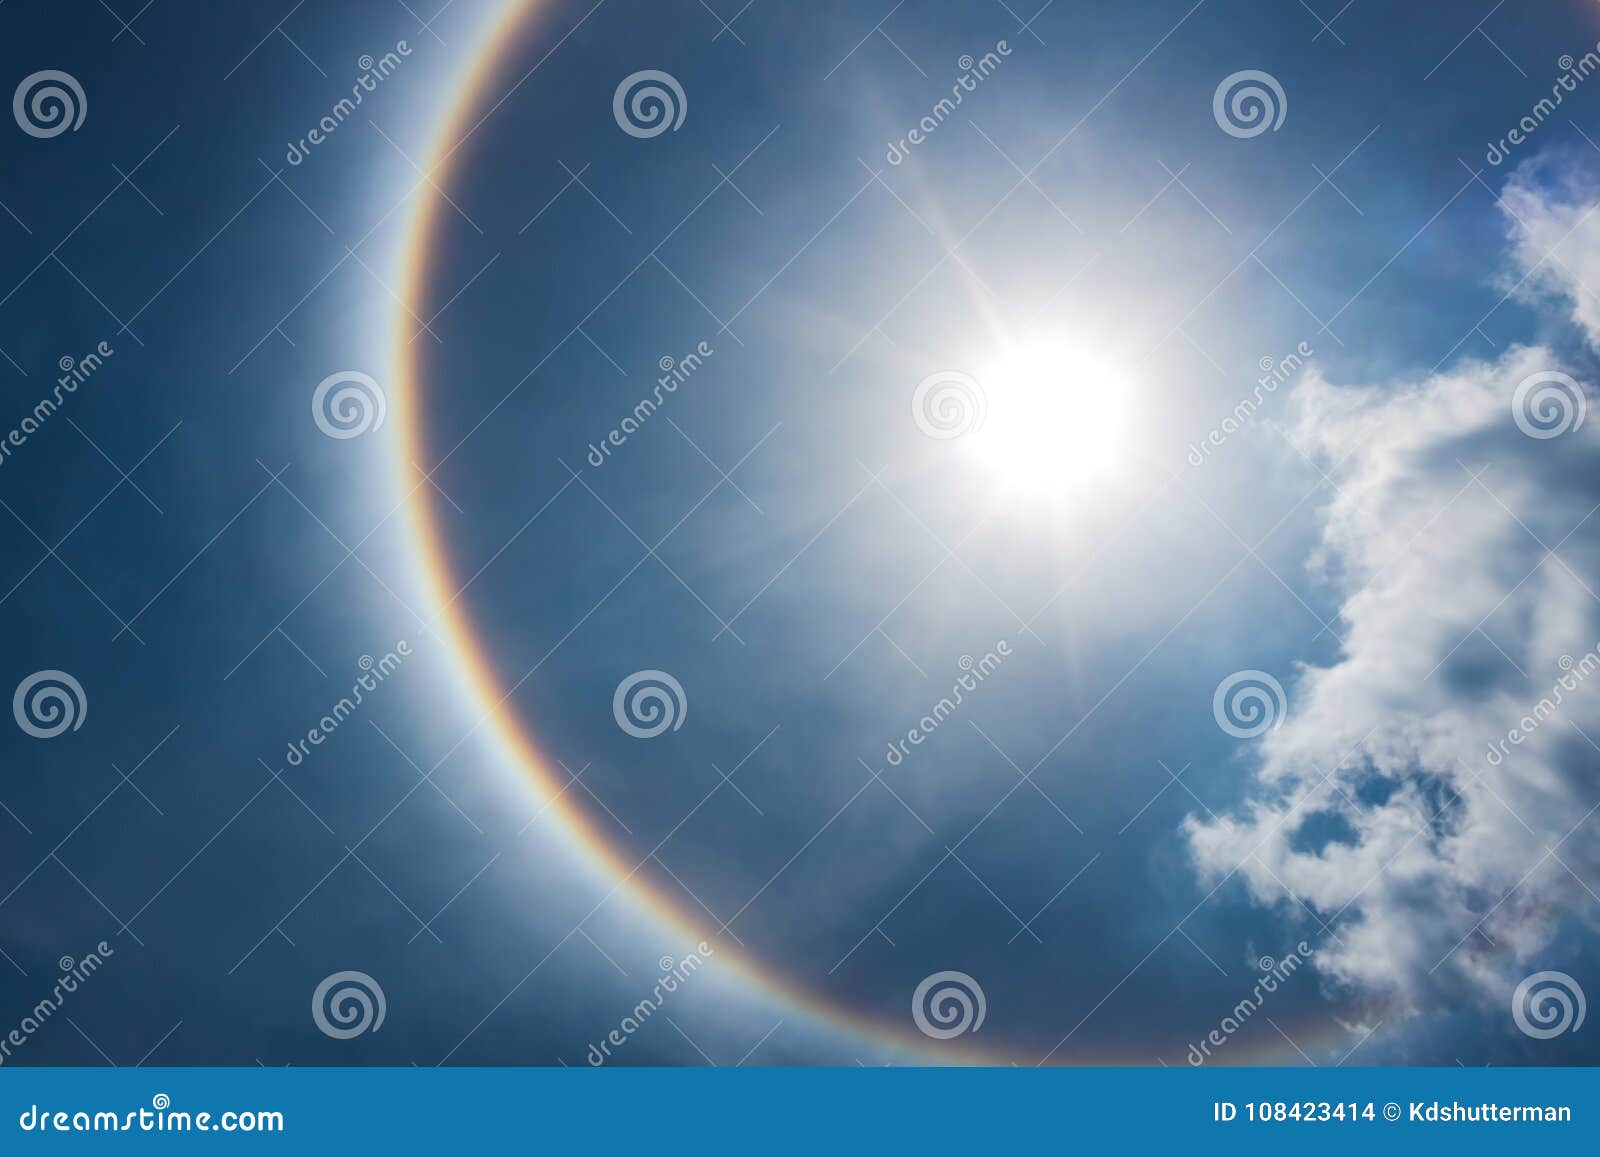 fantastic beautiful sun halo phenomenon. serenity nature.